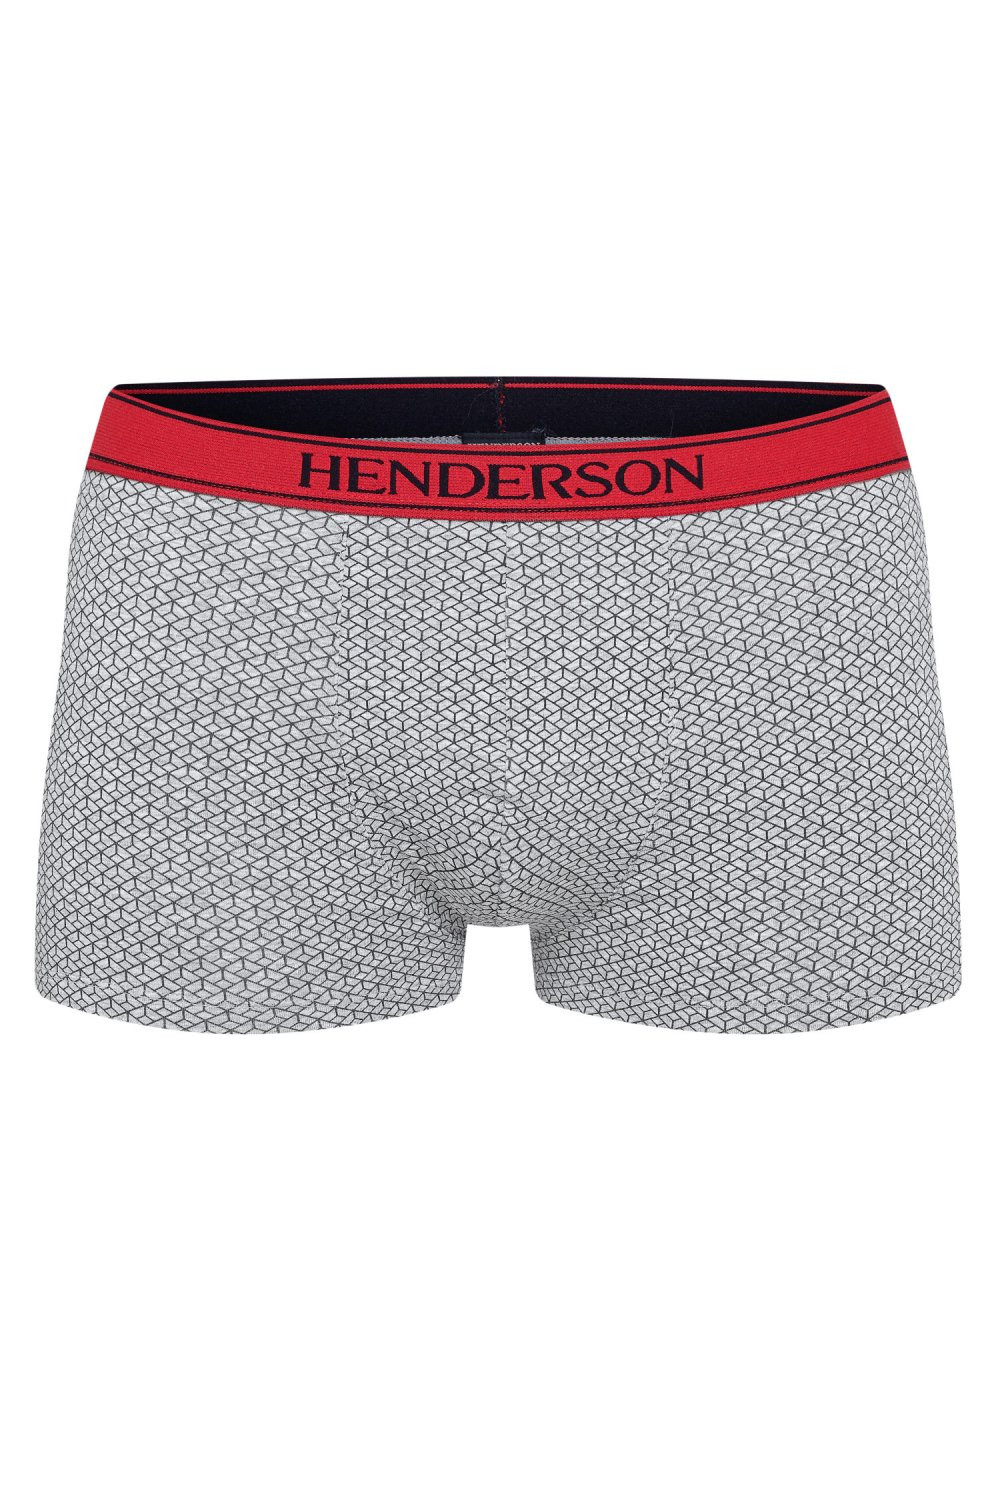 Pánské boxerky model 8447501 šedá XXL - Henderson